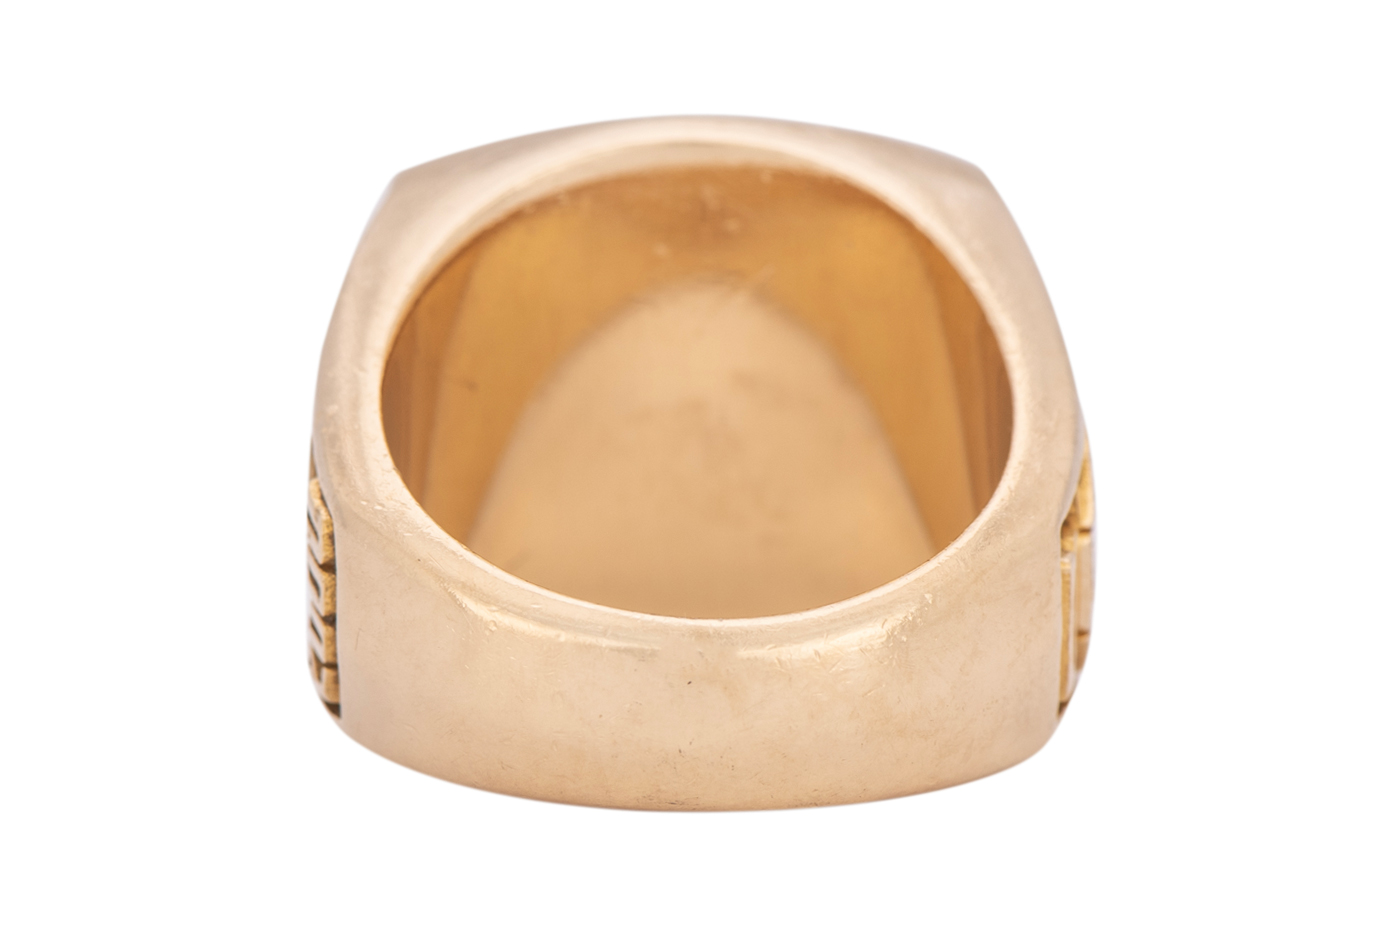 https://hypebeast.com/image/2020/05/kobe-pamela-bryant-los-angeles-lakers-championship-ring-206-000-usd-auction-004.jpg